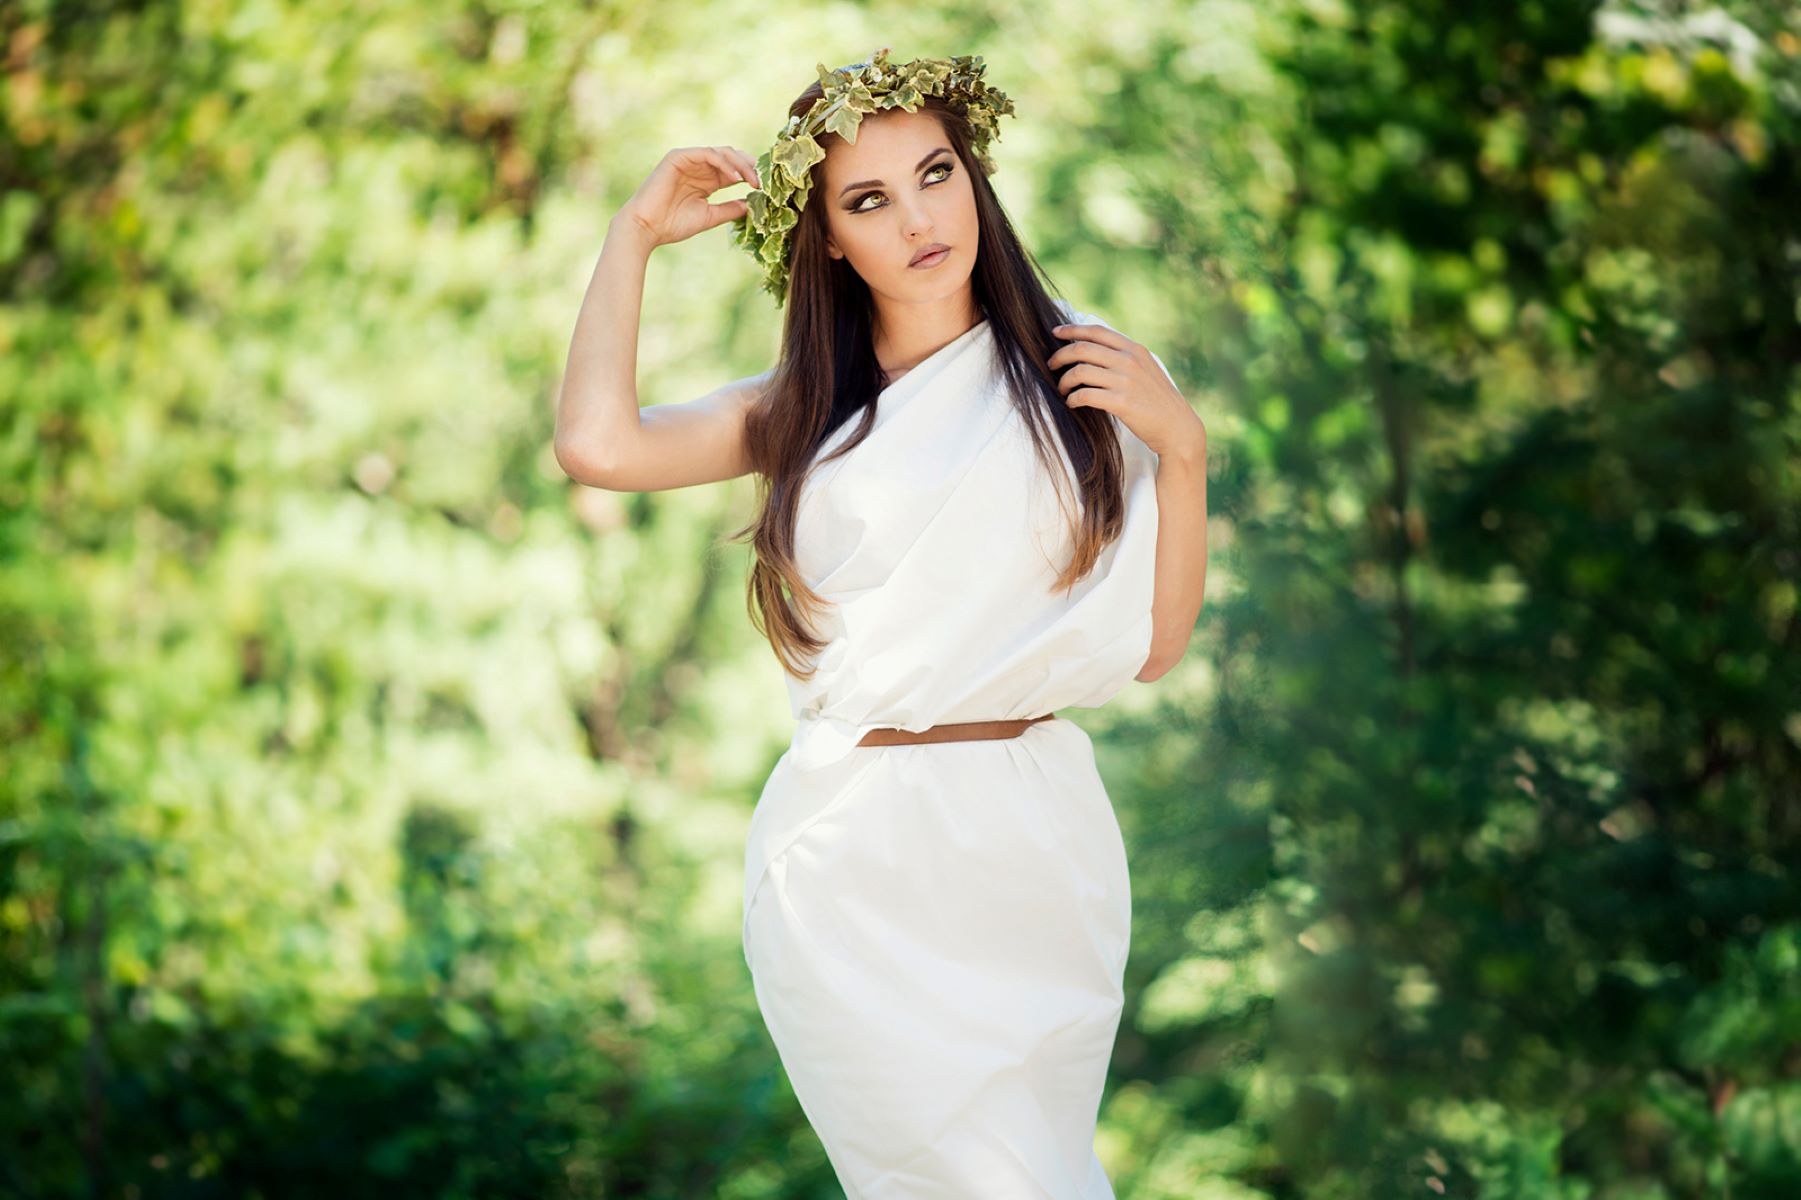 Easy DIY Greek Goddess Costume: Step-by-Step Guide!